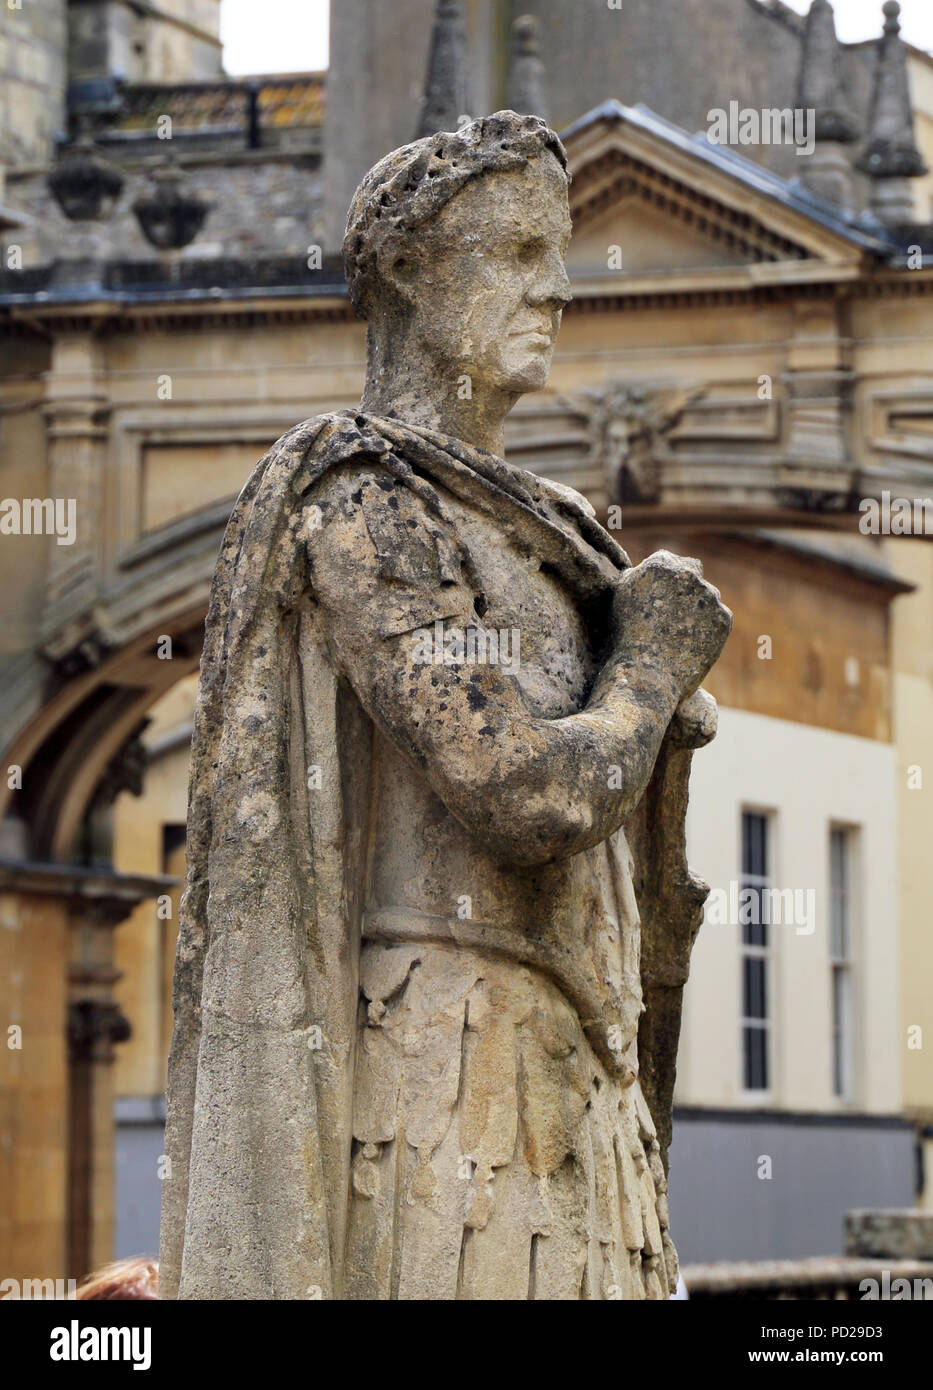 Roman statue on the terrace at the Roman baths in Bath England. Stock Photo